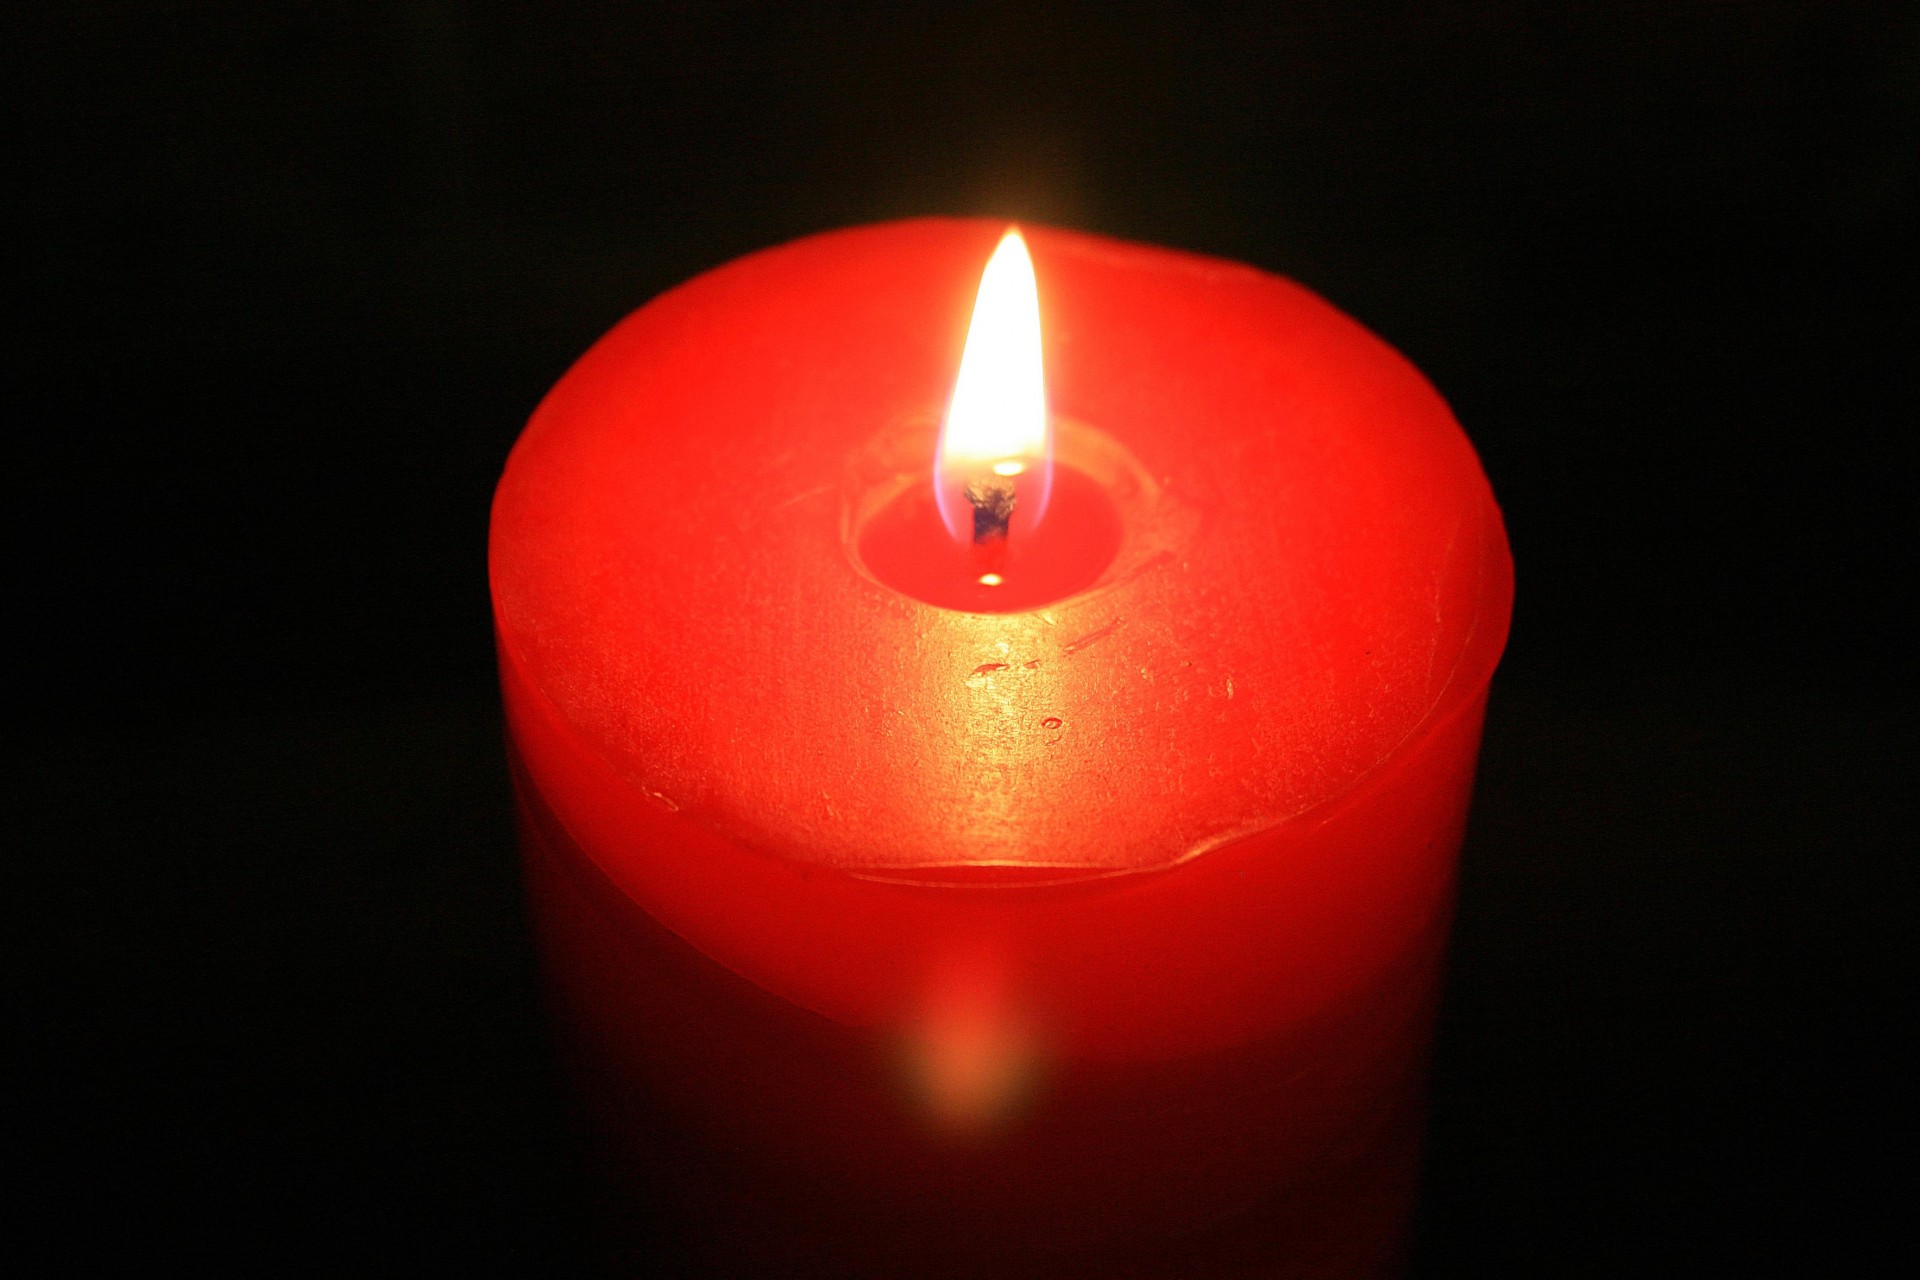 горение свечи фото